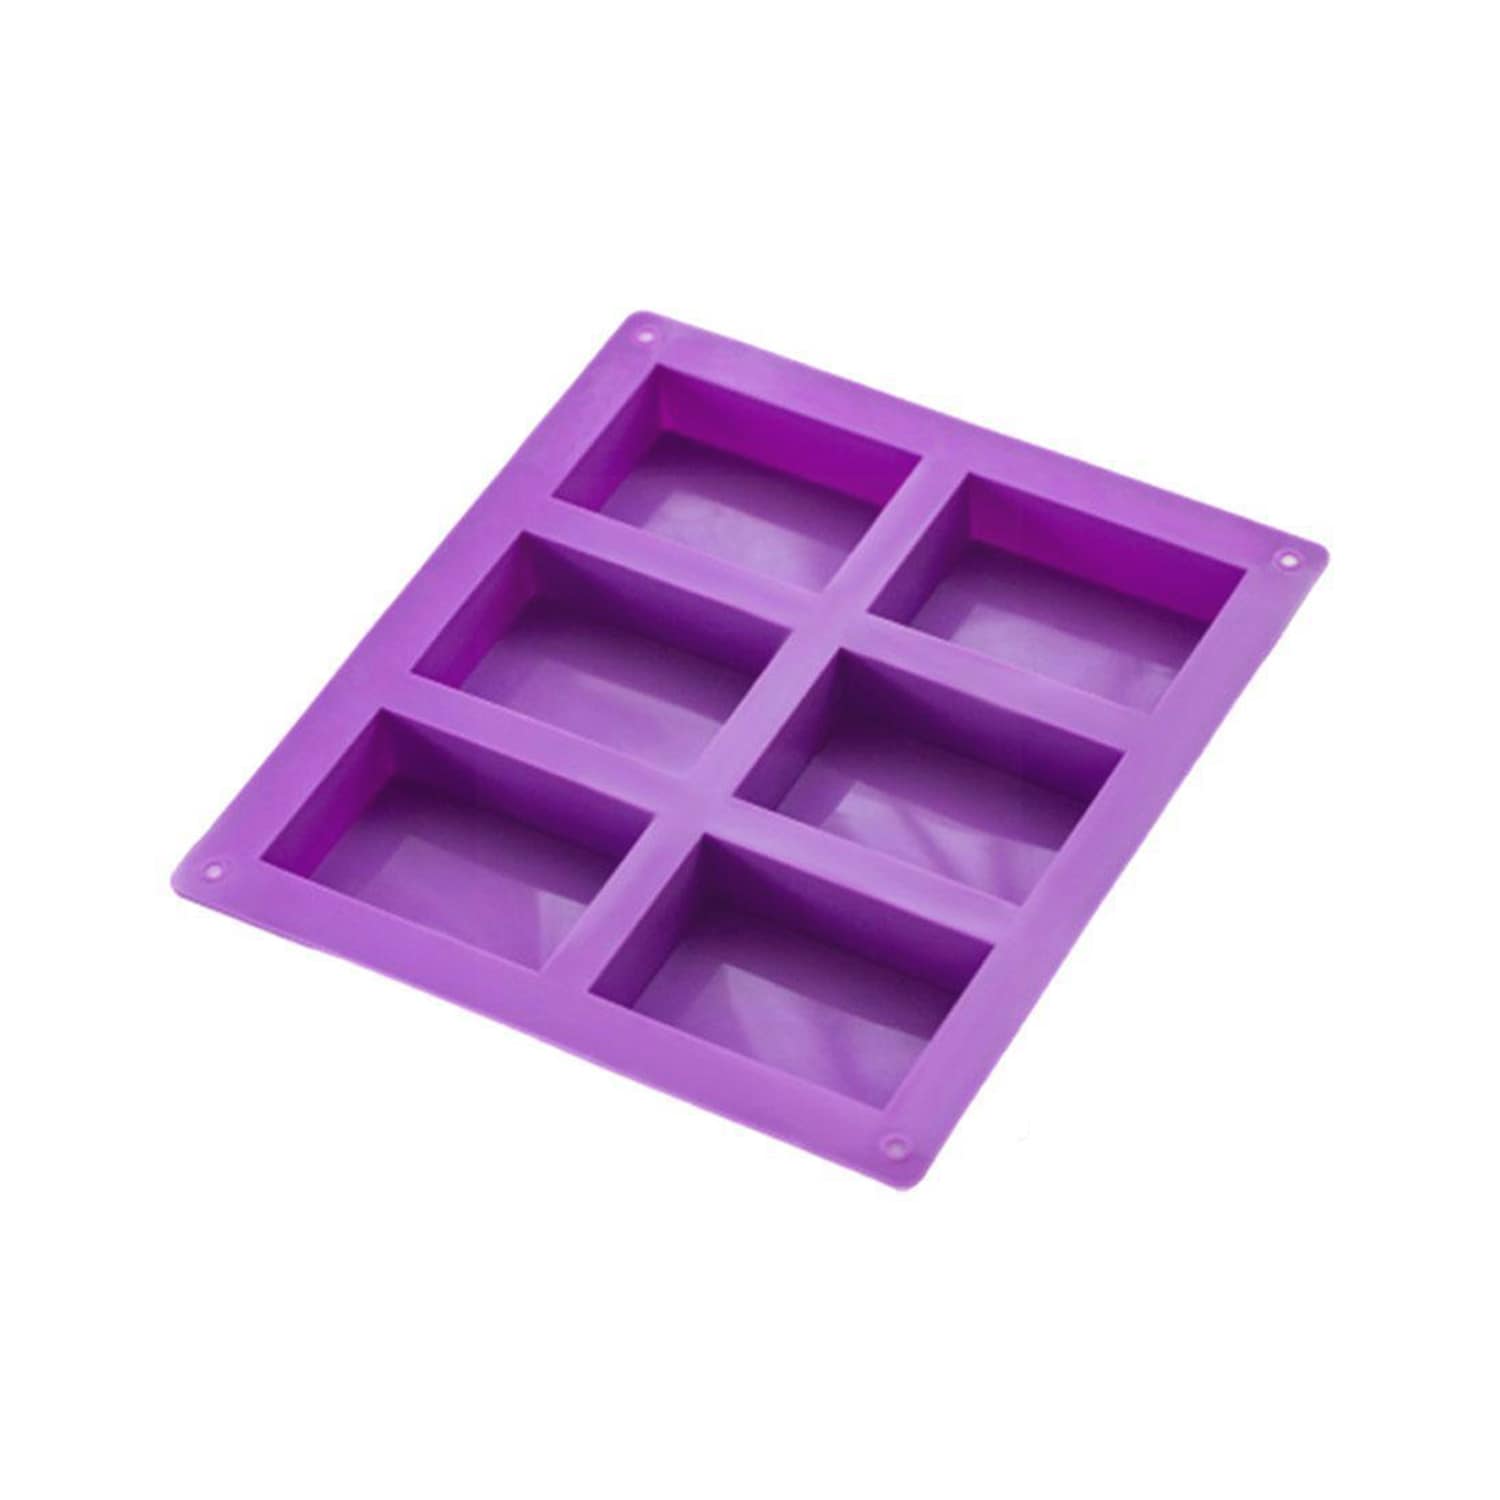 6 Cavity Silicone Soap Molds Square Rectangle Shape Handmade Soap